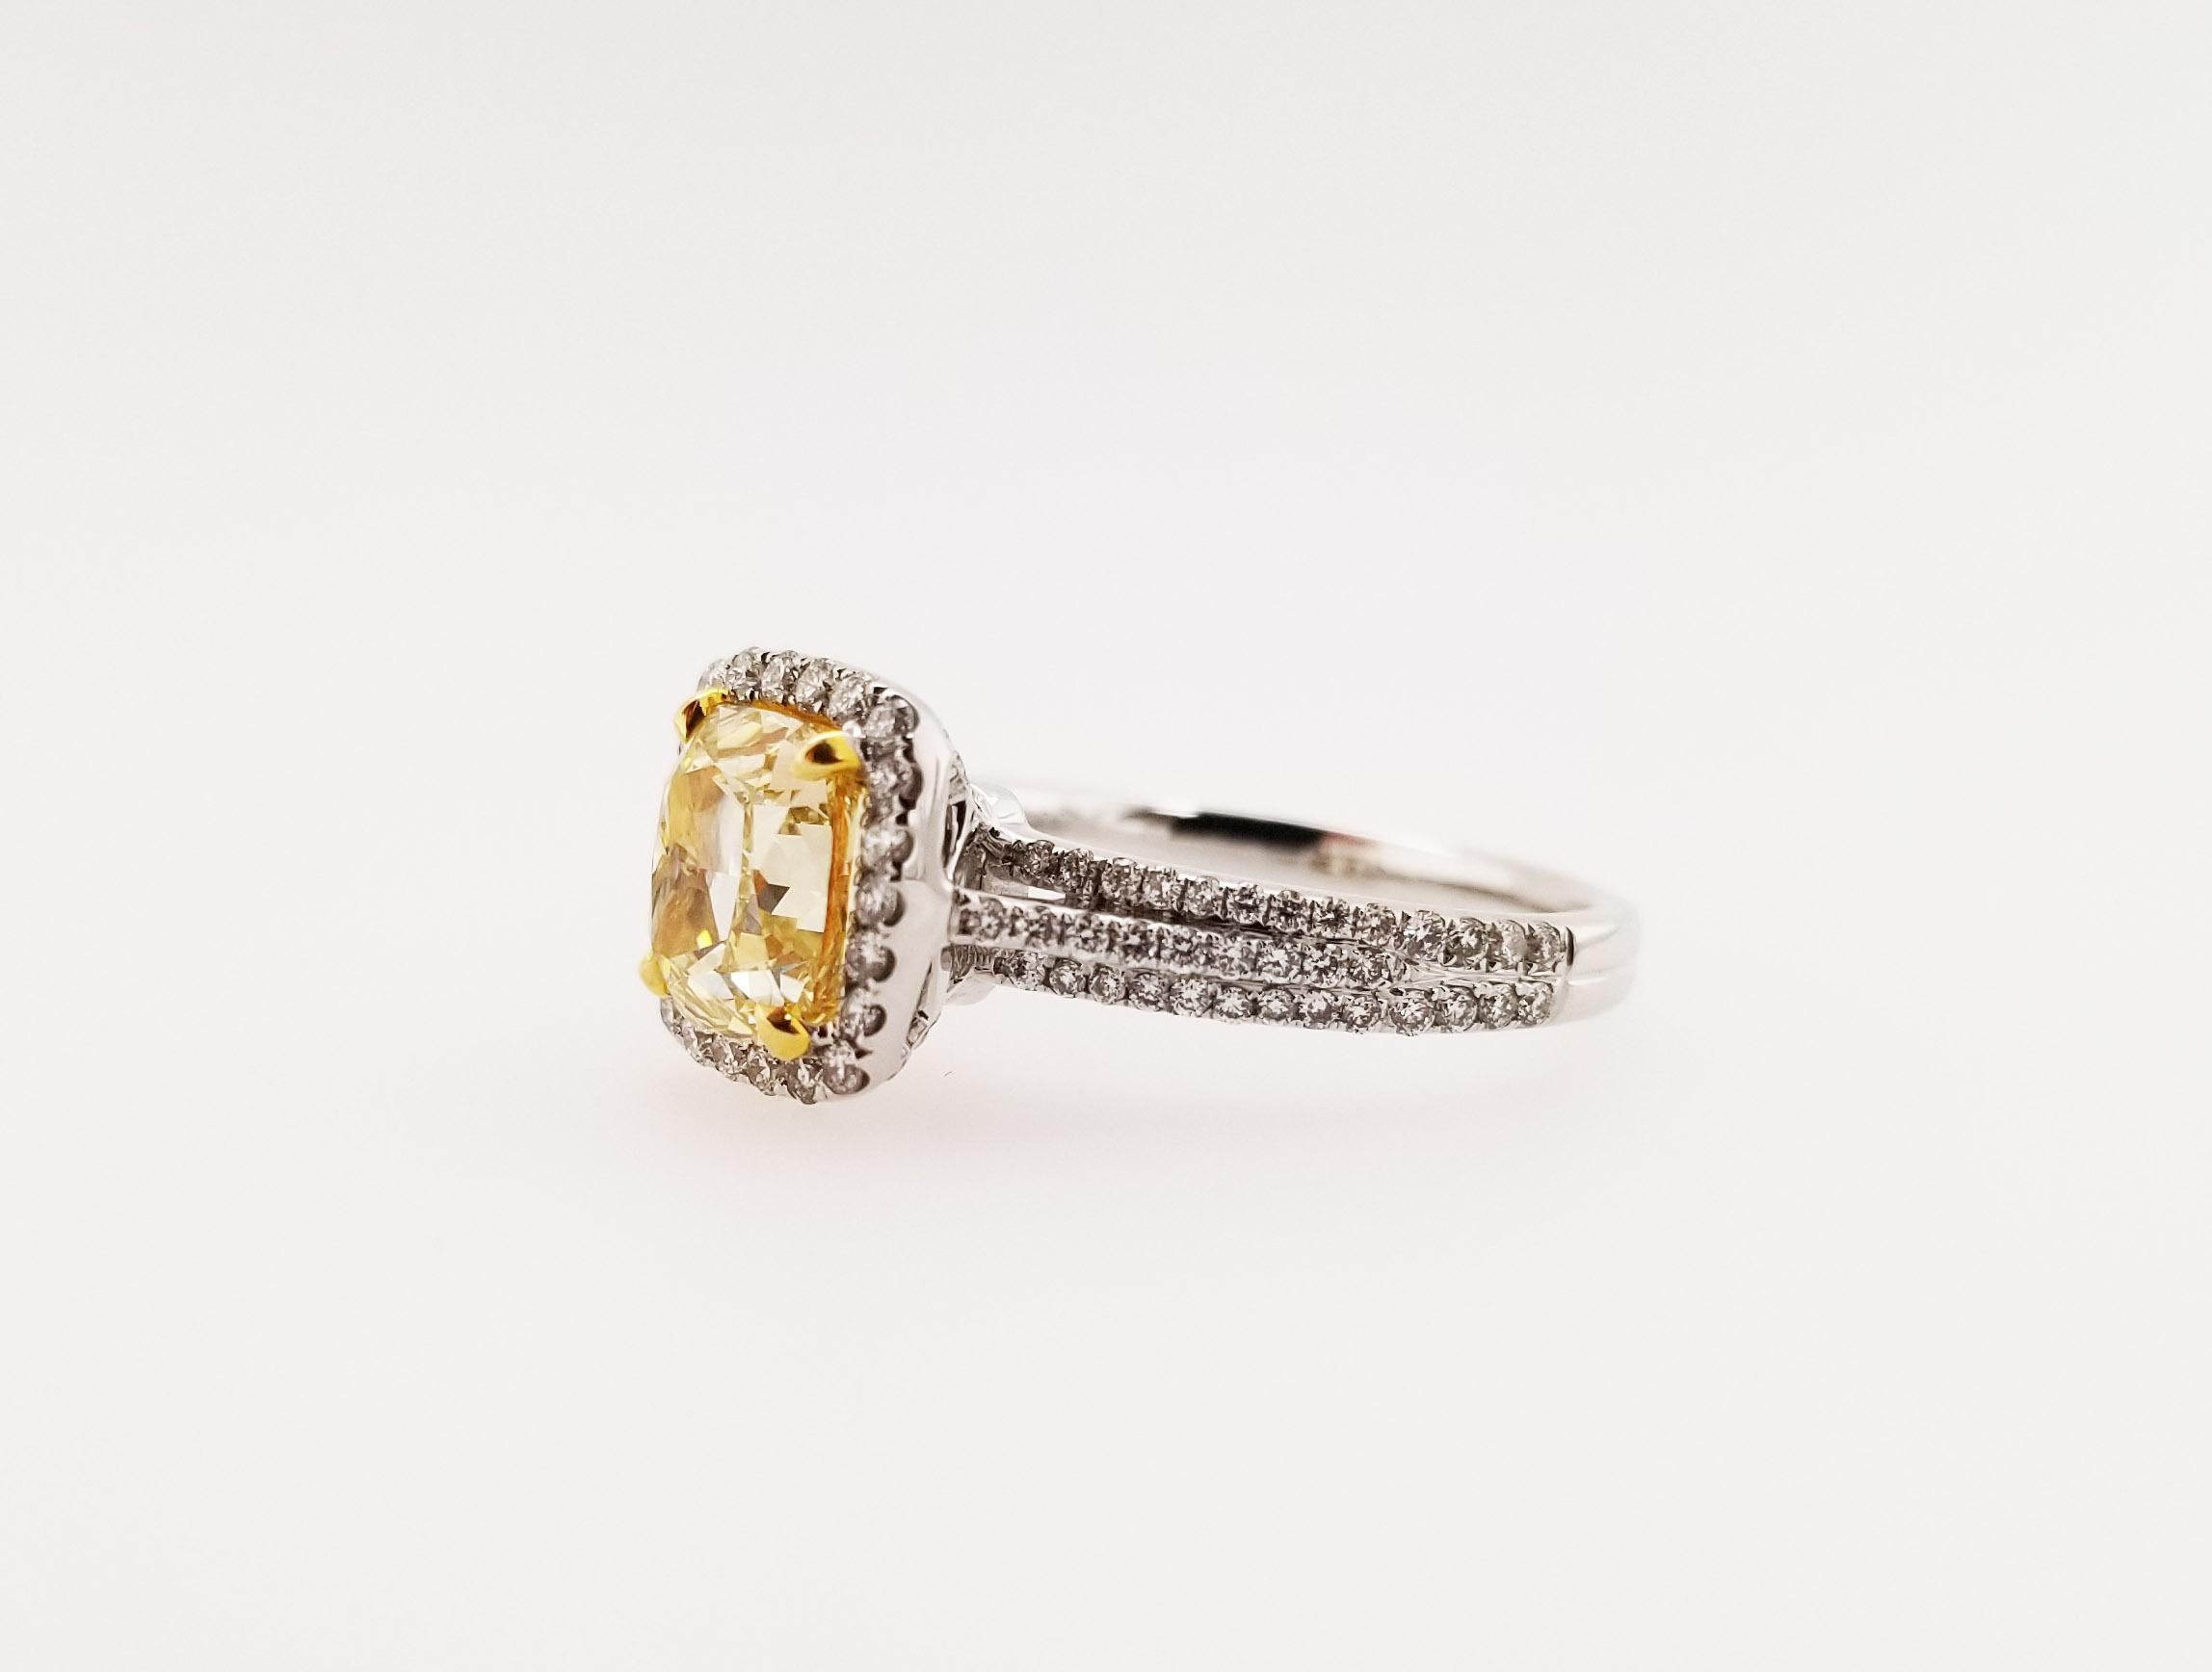 Scarselli GIA 2 Cushion Cut Fancy Yellow Diamond Engagement Ring in 18 Karat 2